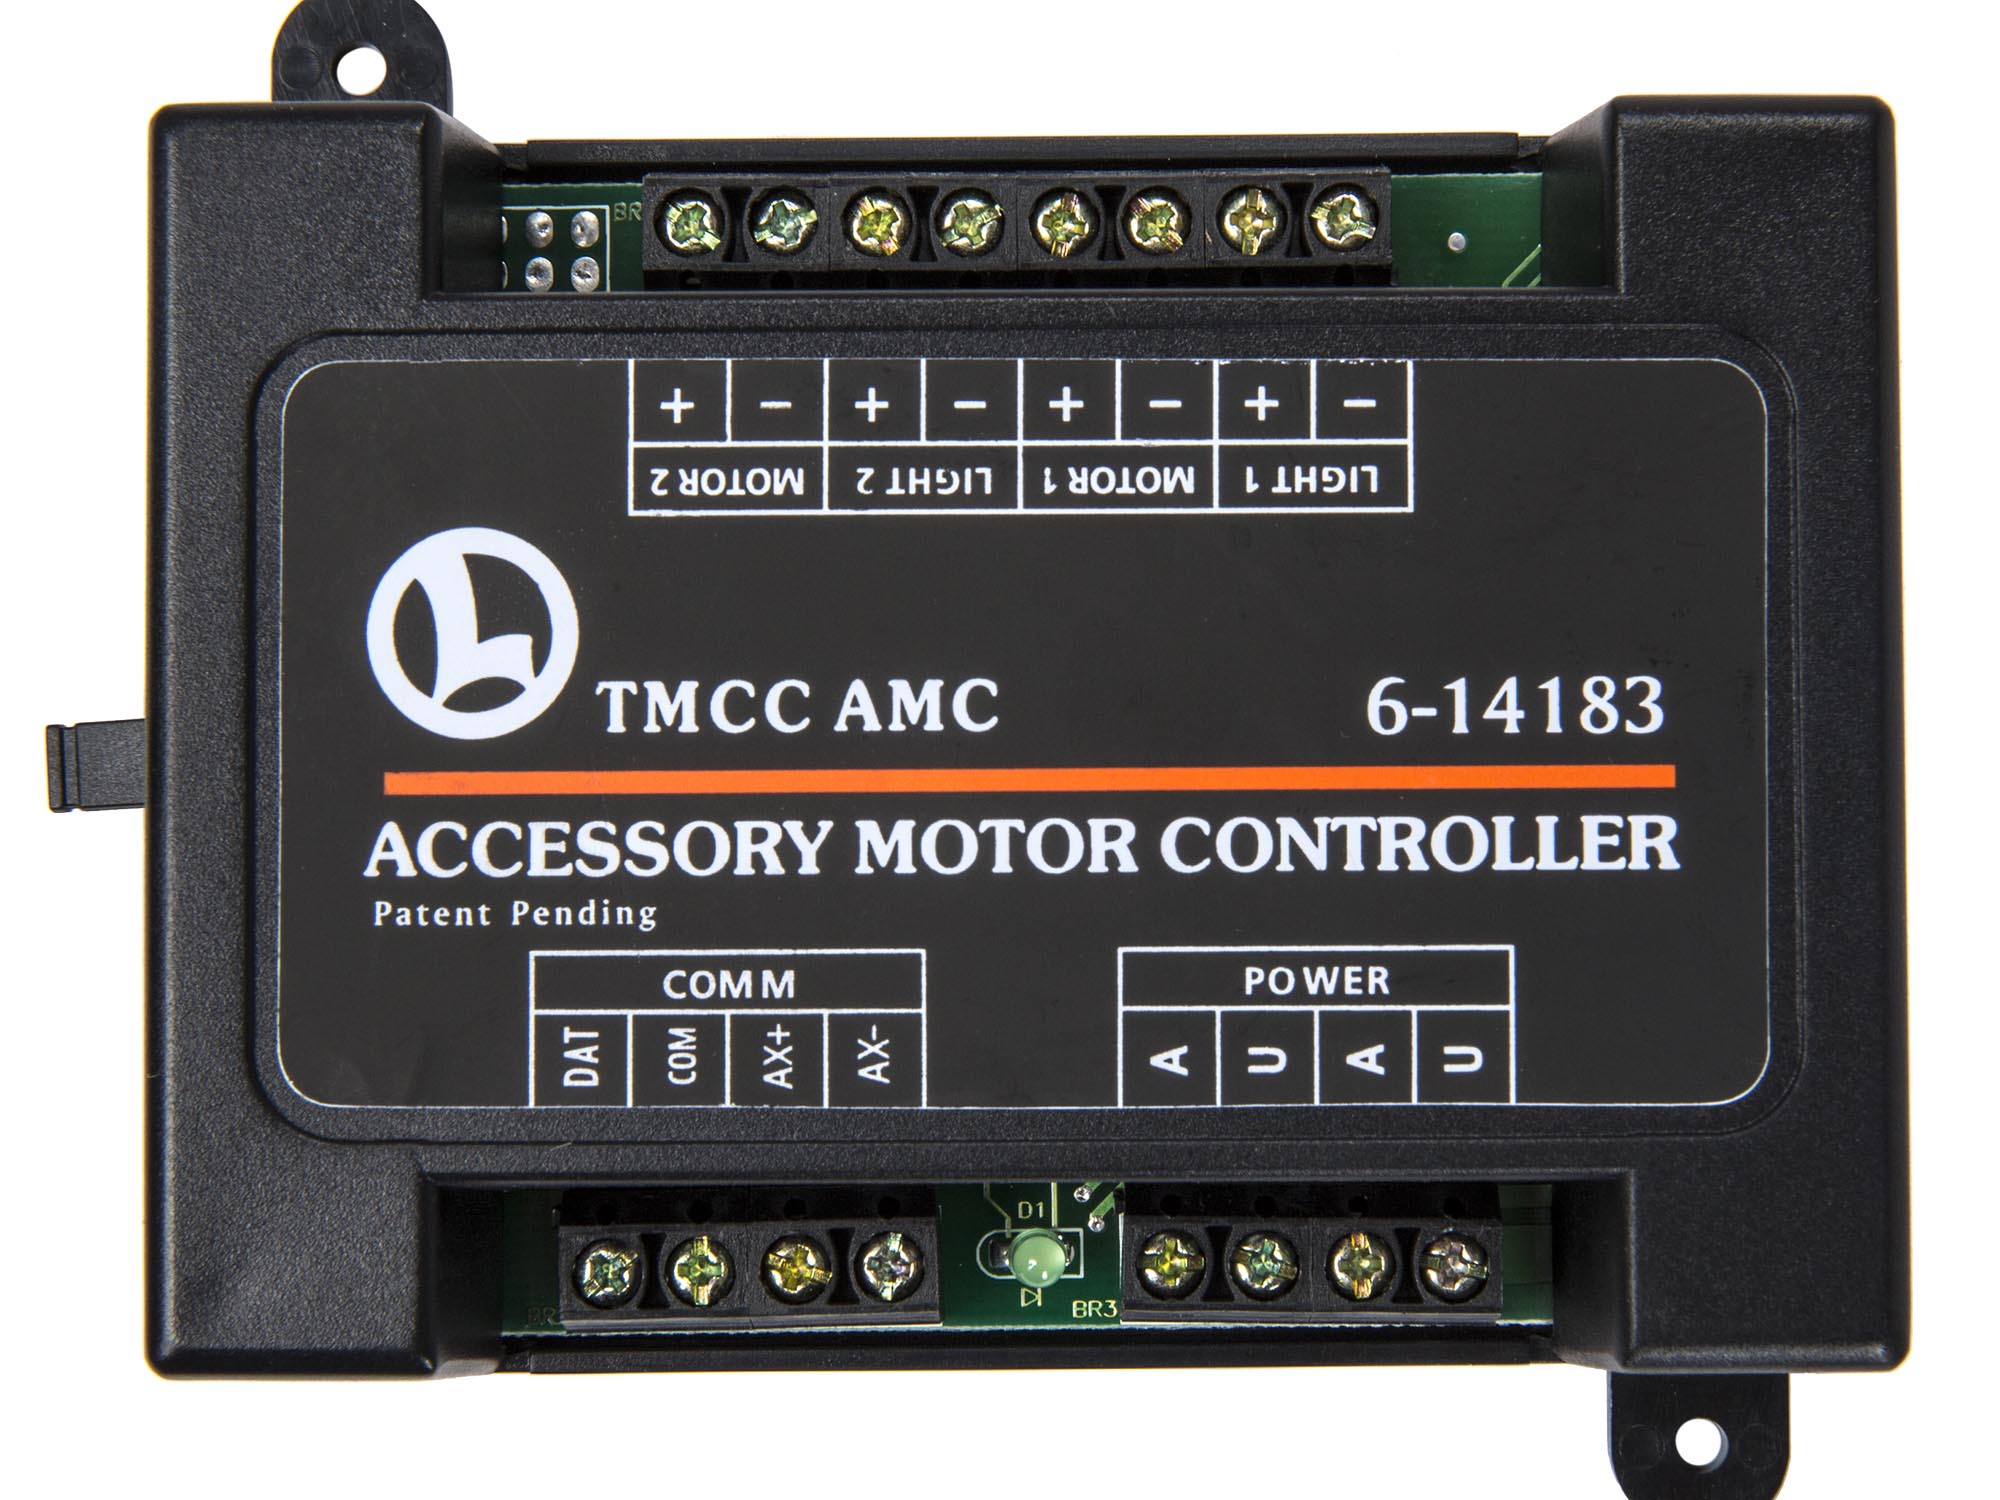 6-14183 TMCC ACCESSORY MOTOR CONTROLLER (AMC)